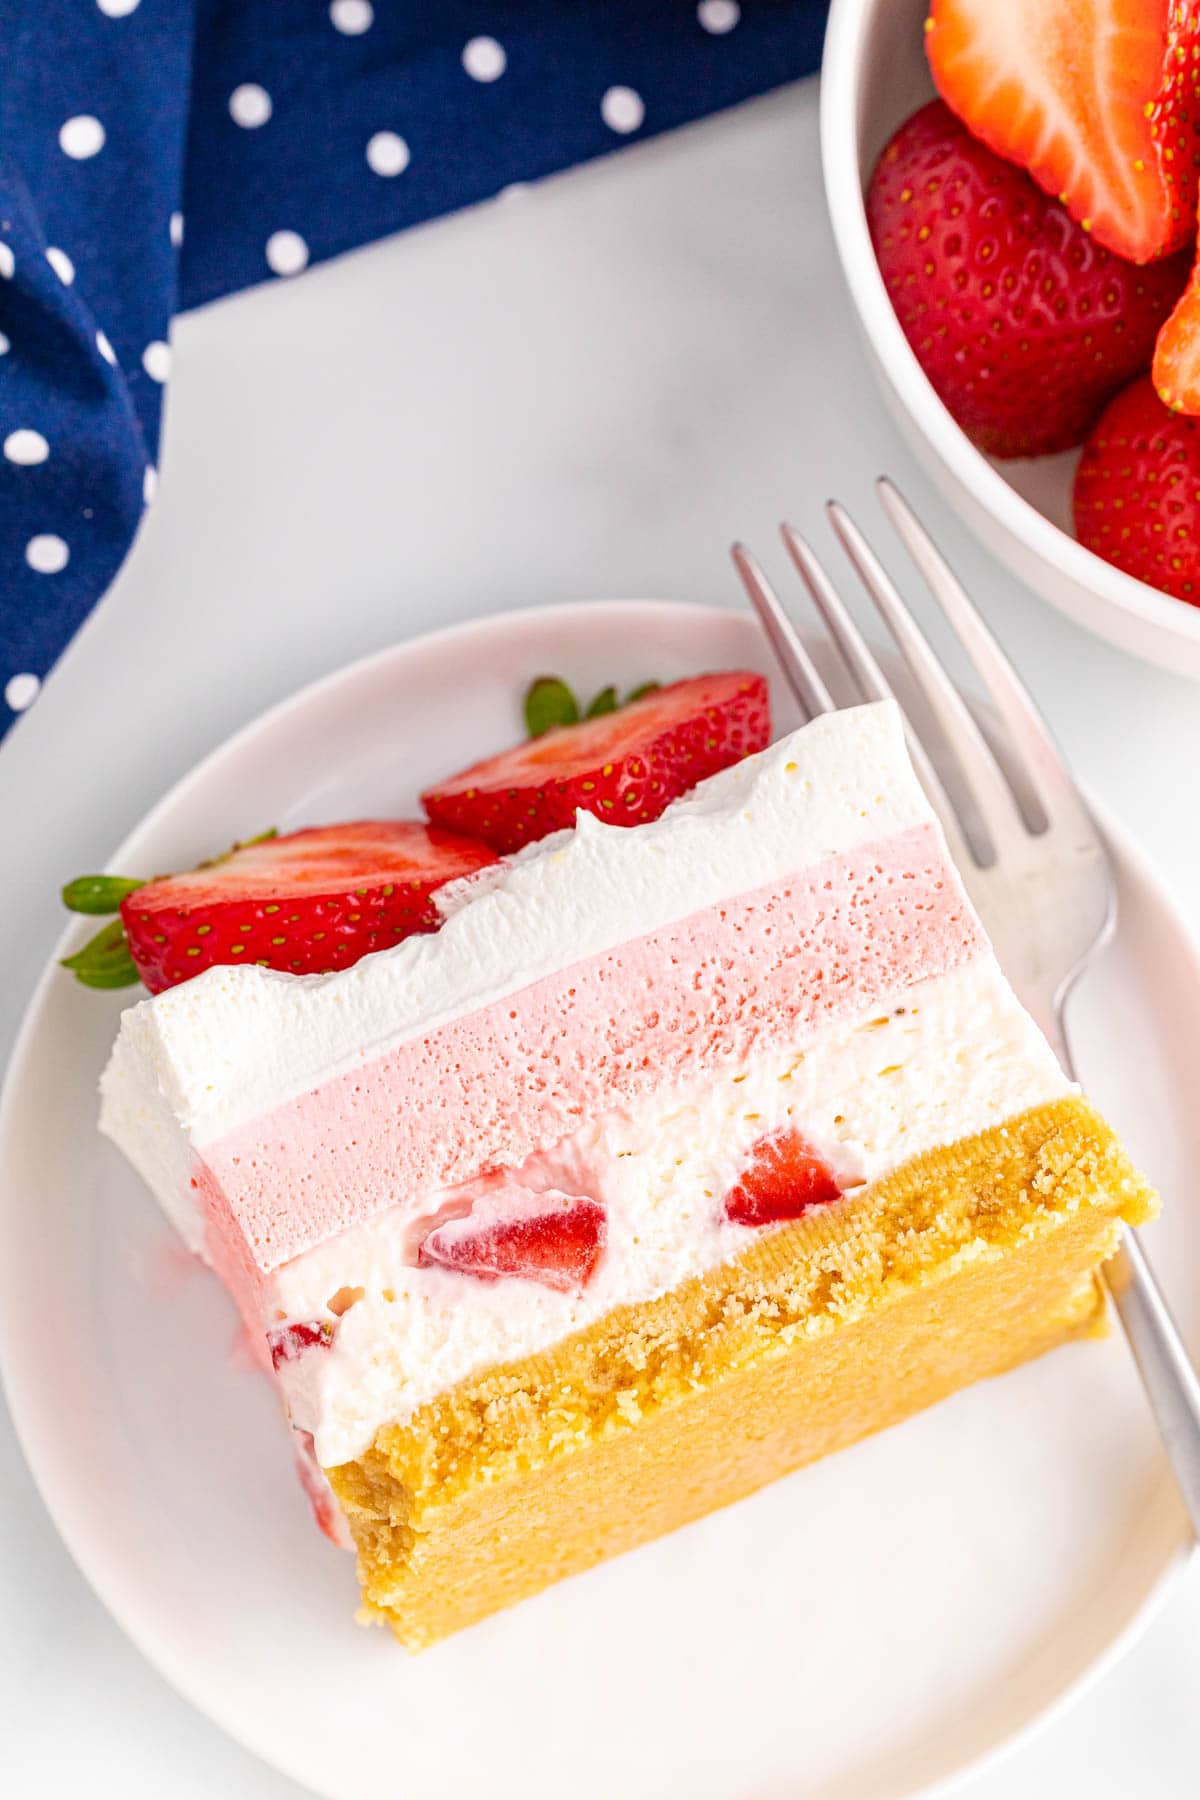 Slice of strawberry cheesecake lush on white plate